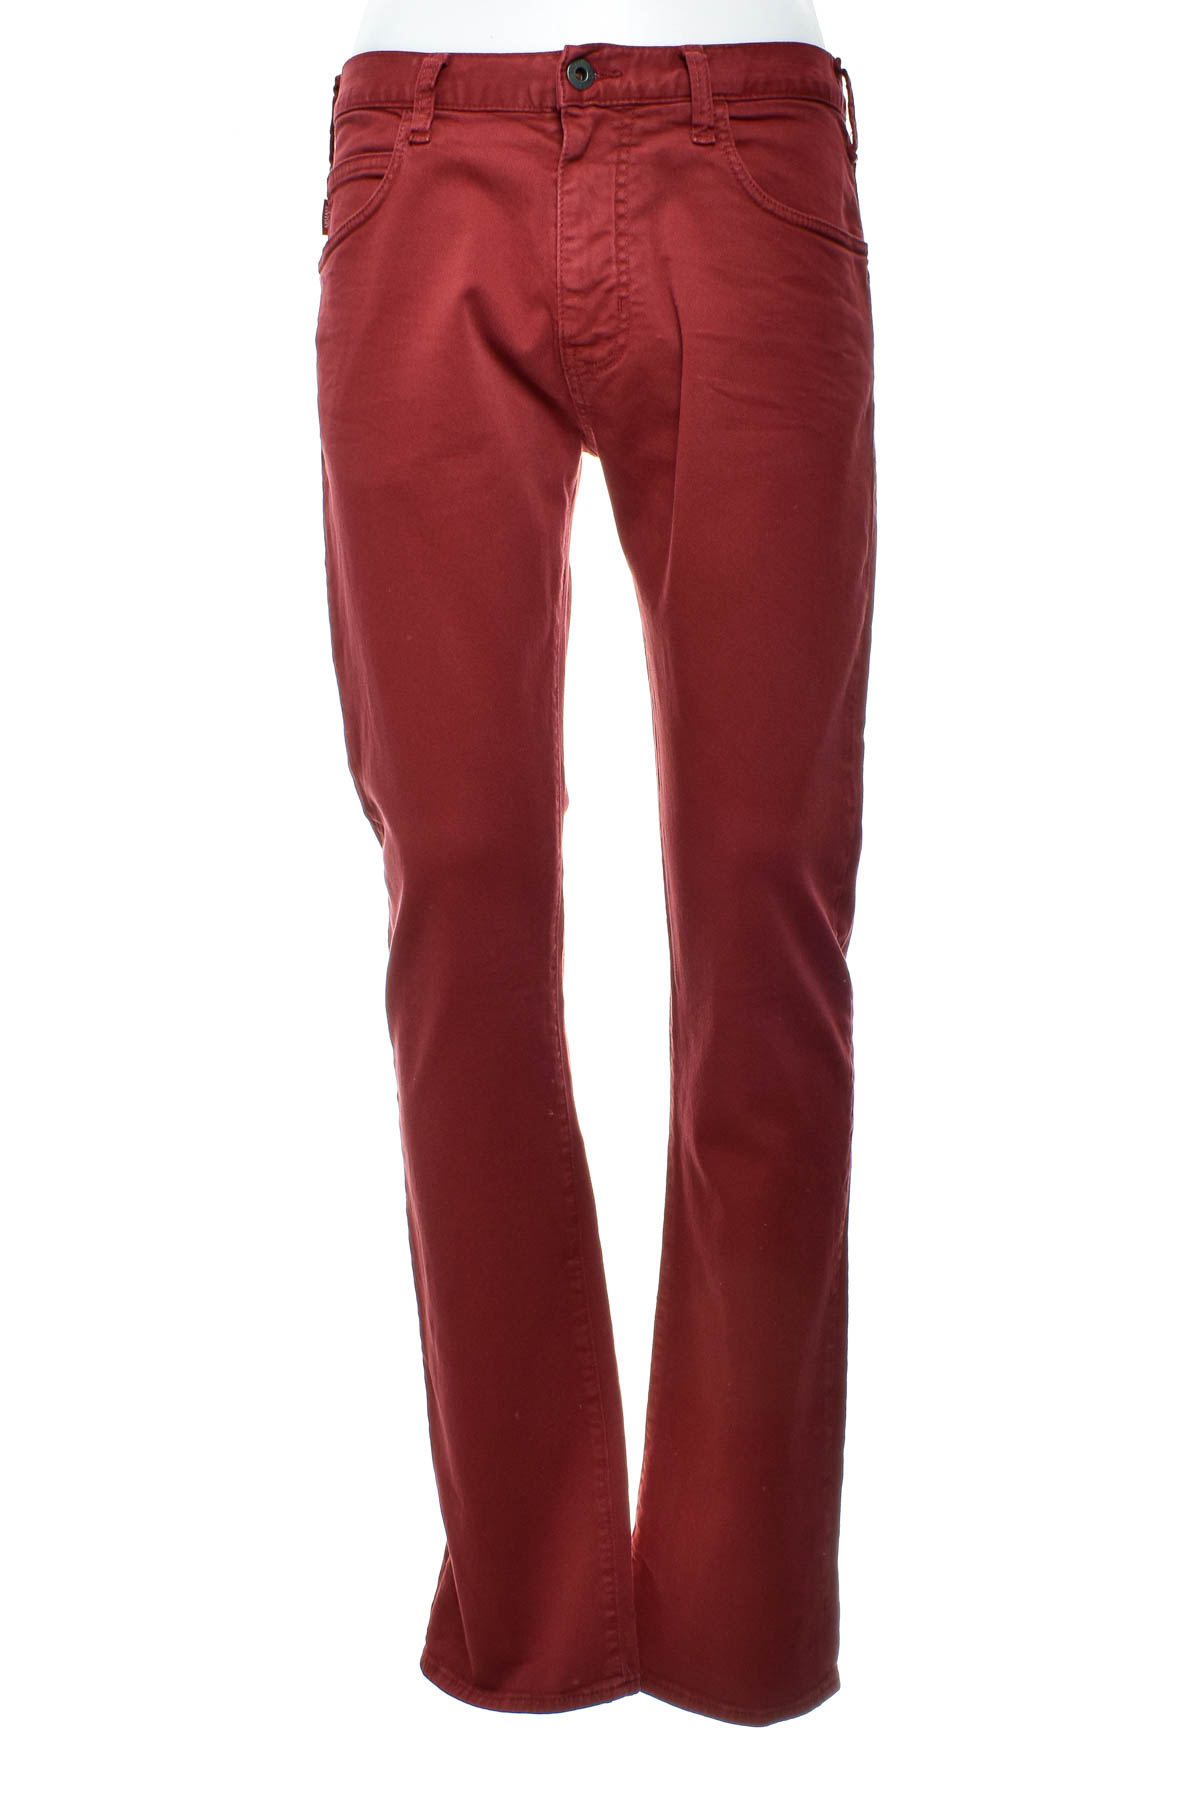 Men's trousers - Armani - 0